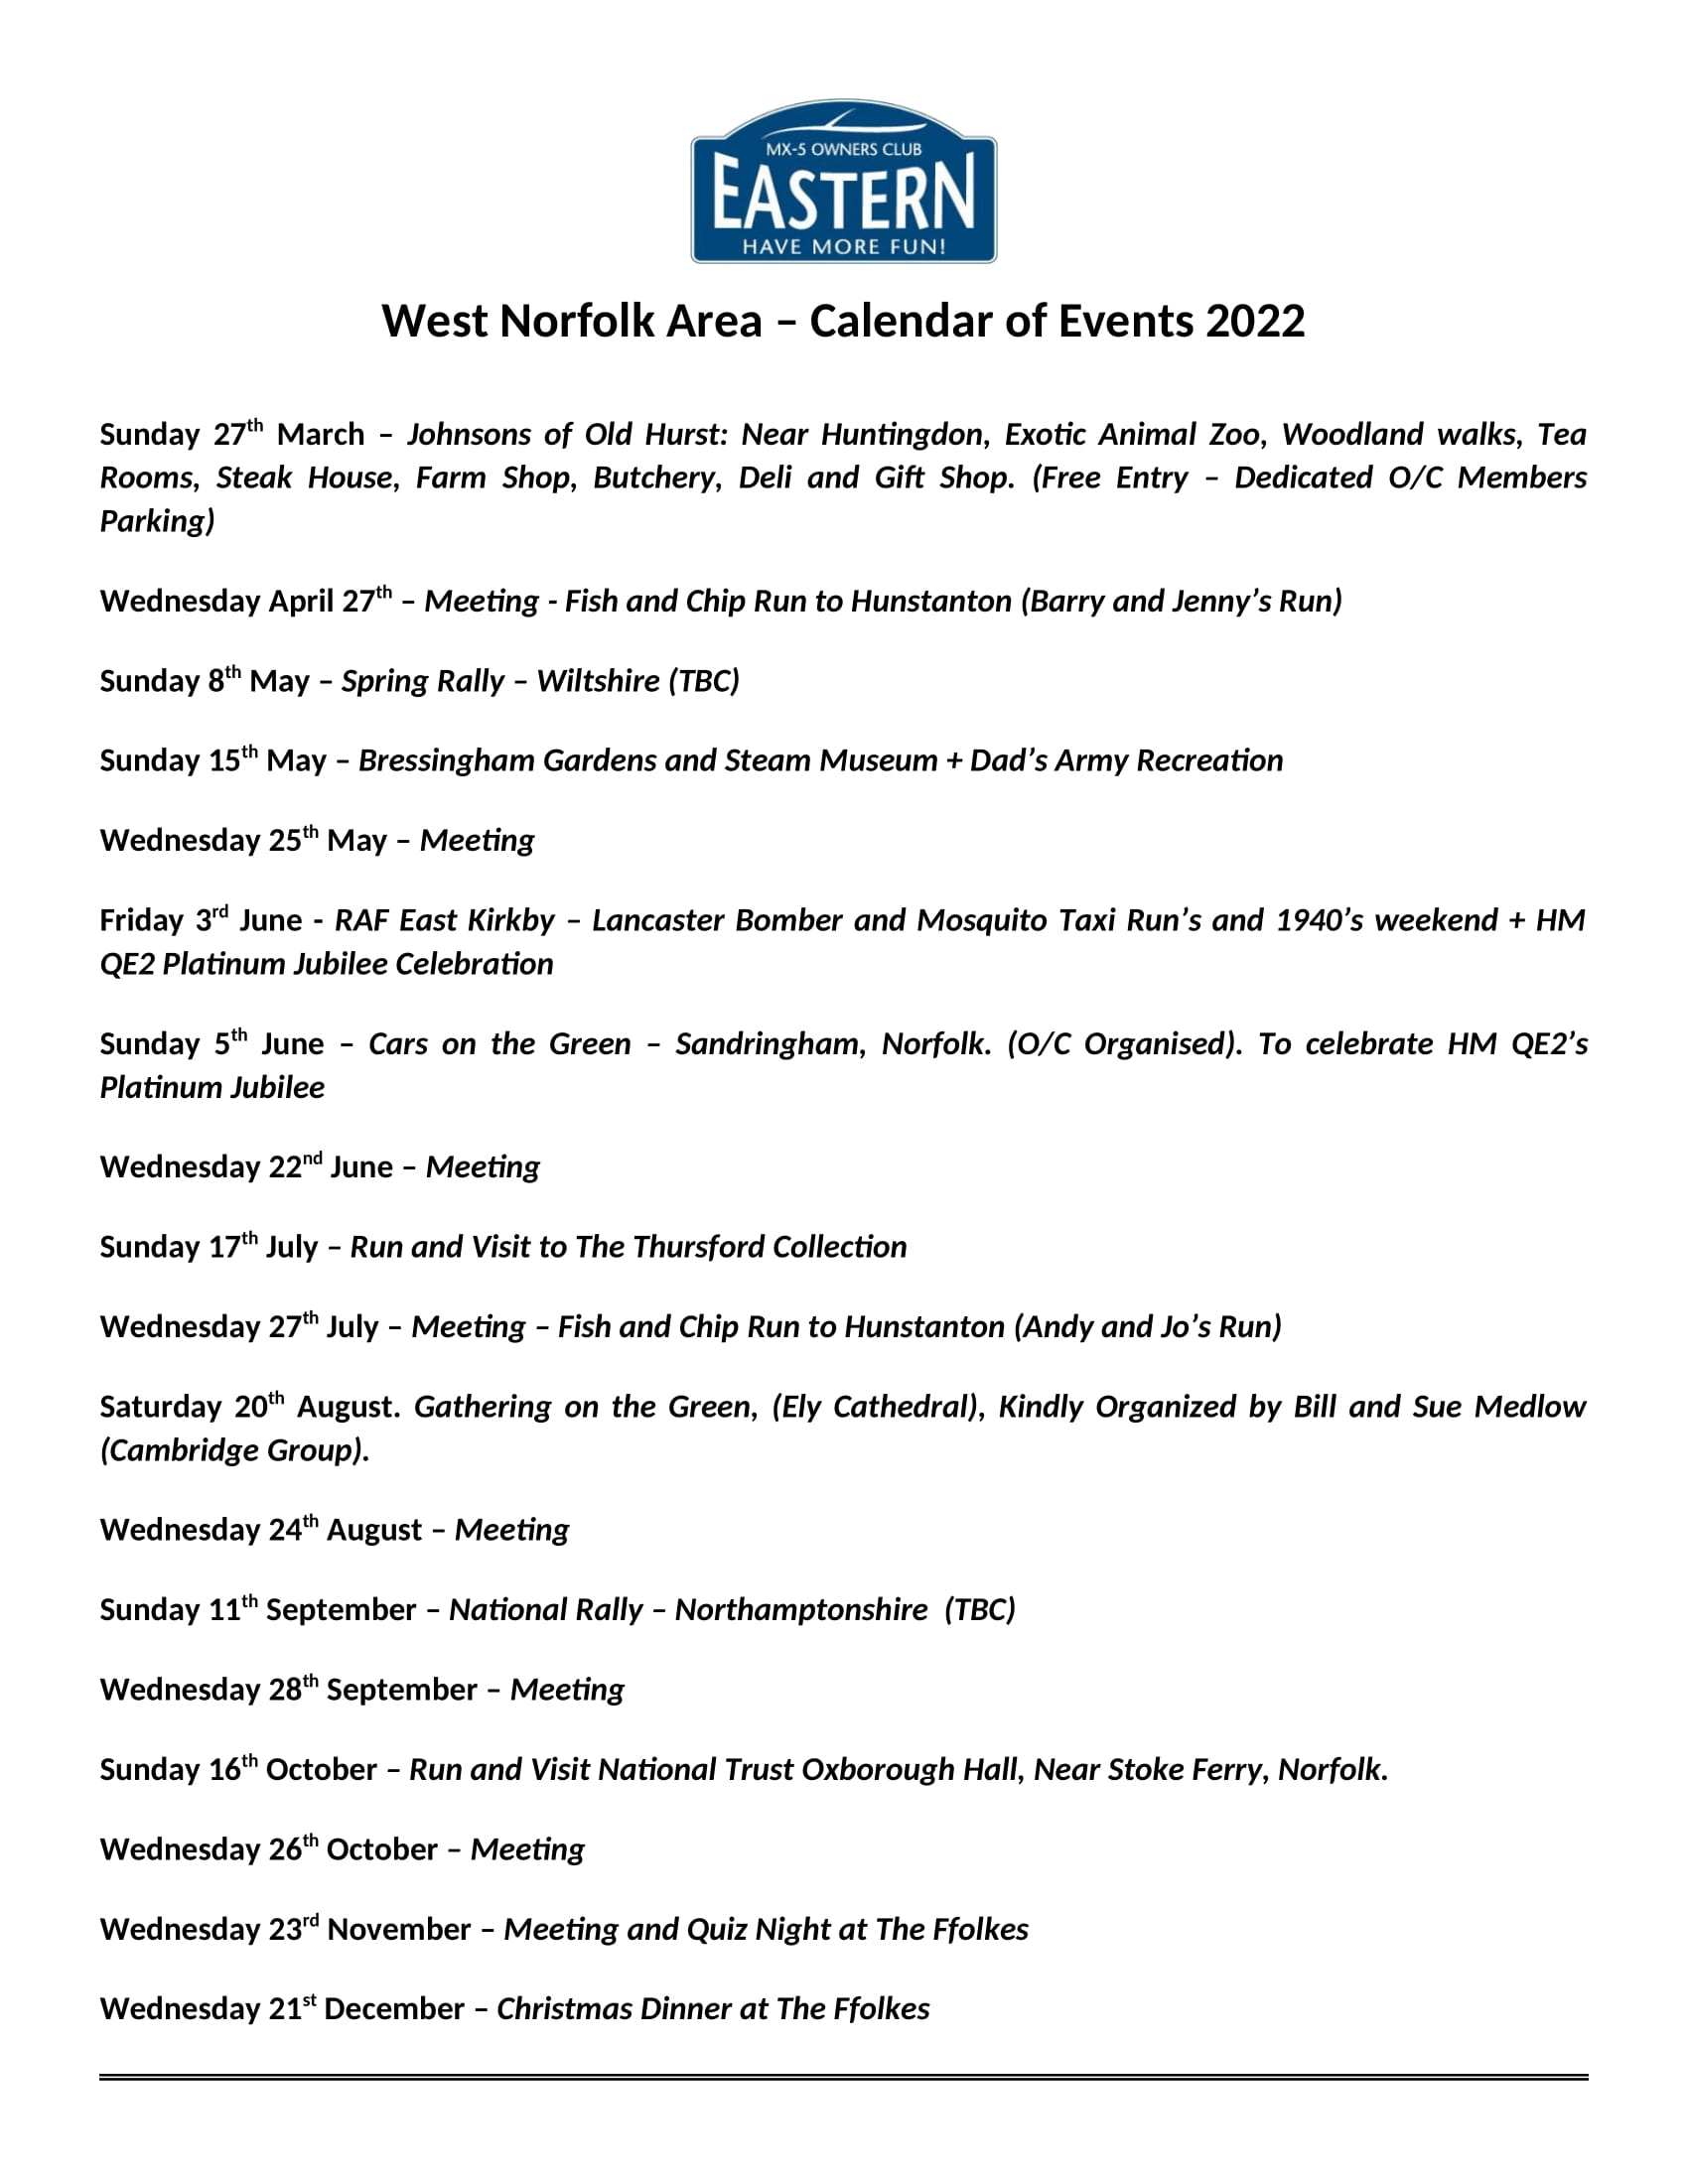 Eastern Region West Norfolk Calendar of Events 2022 Eastern MX